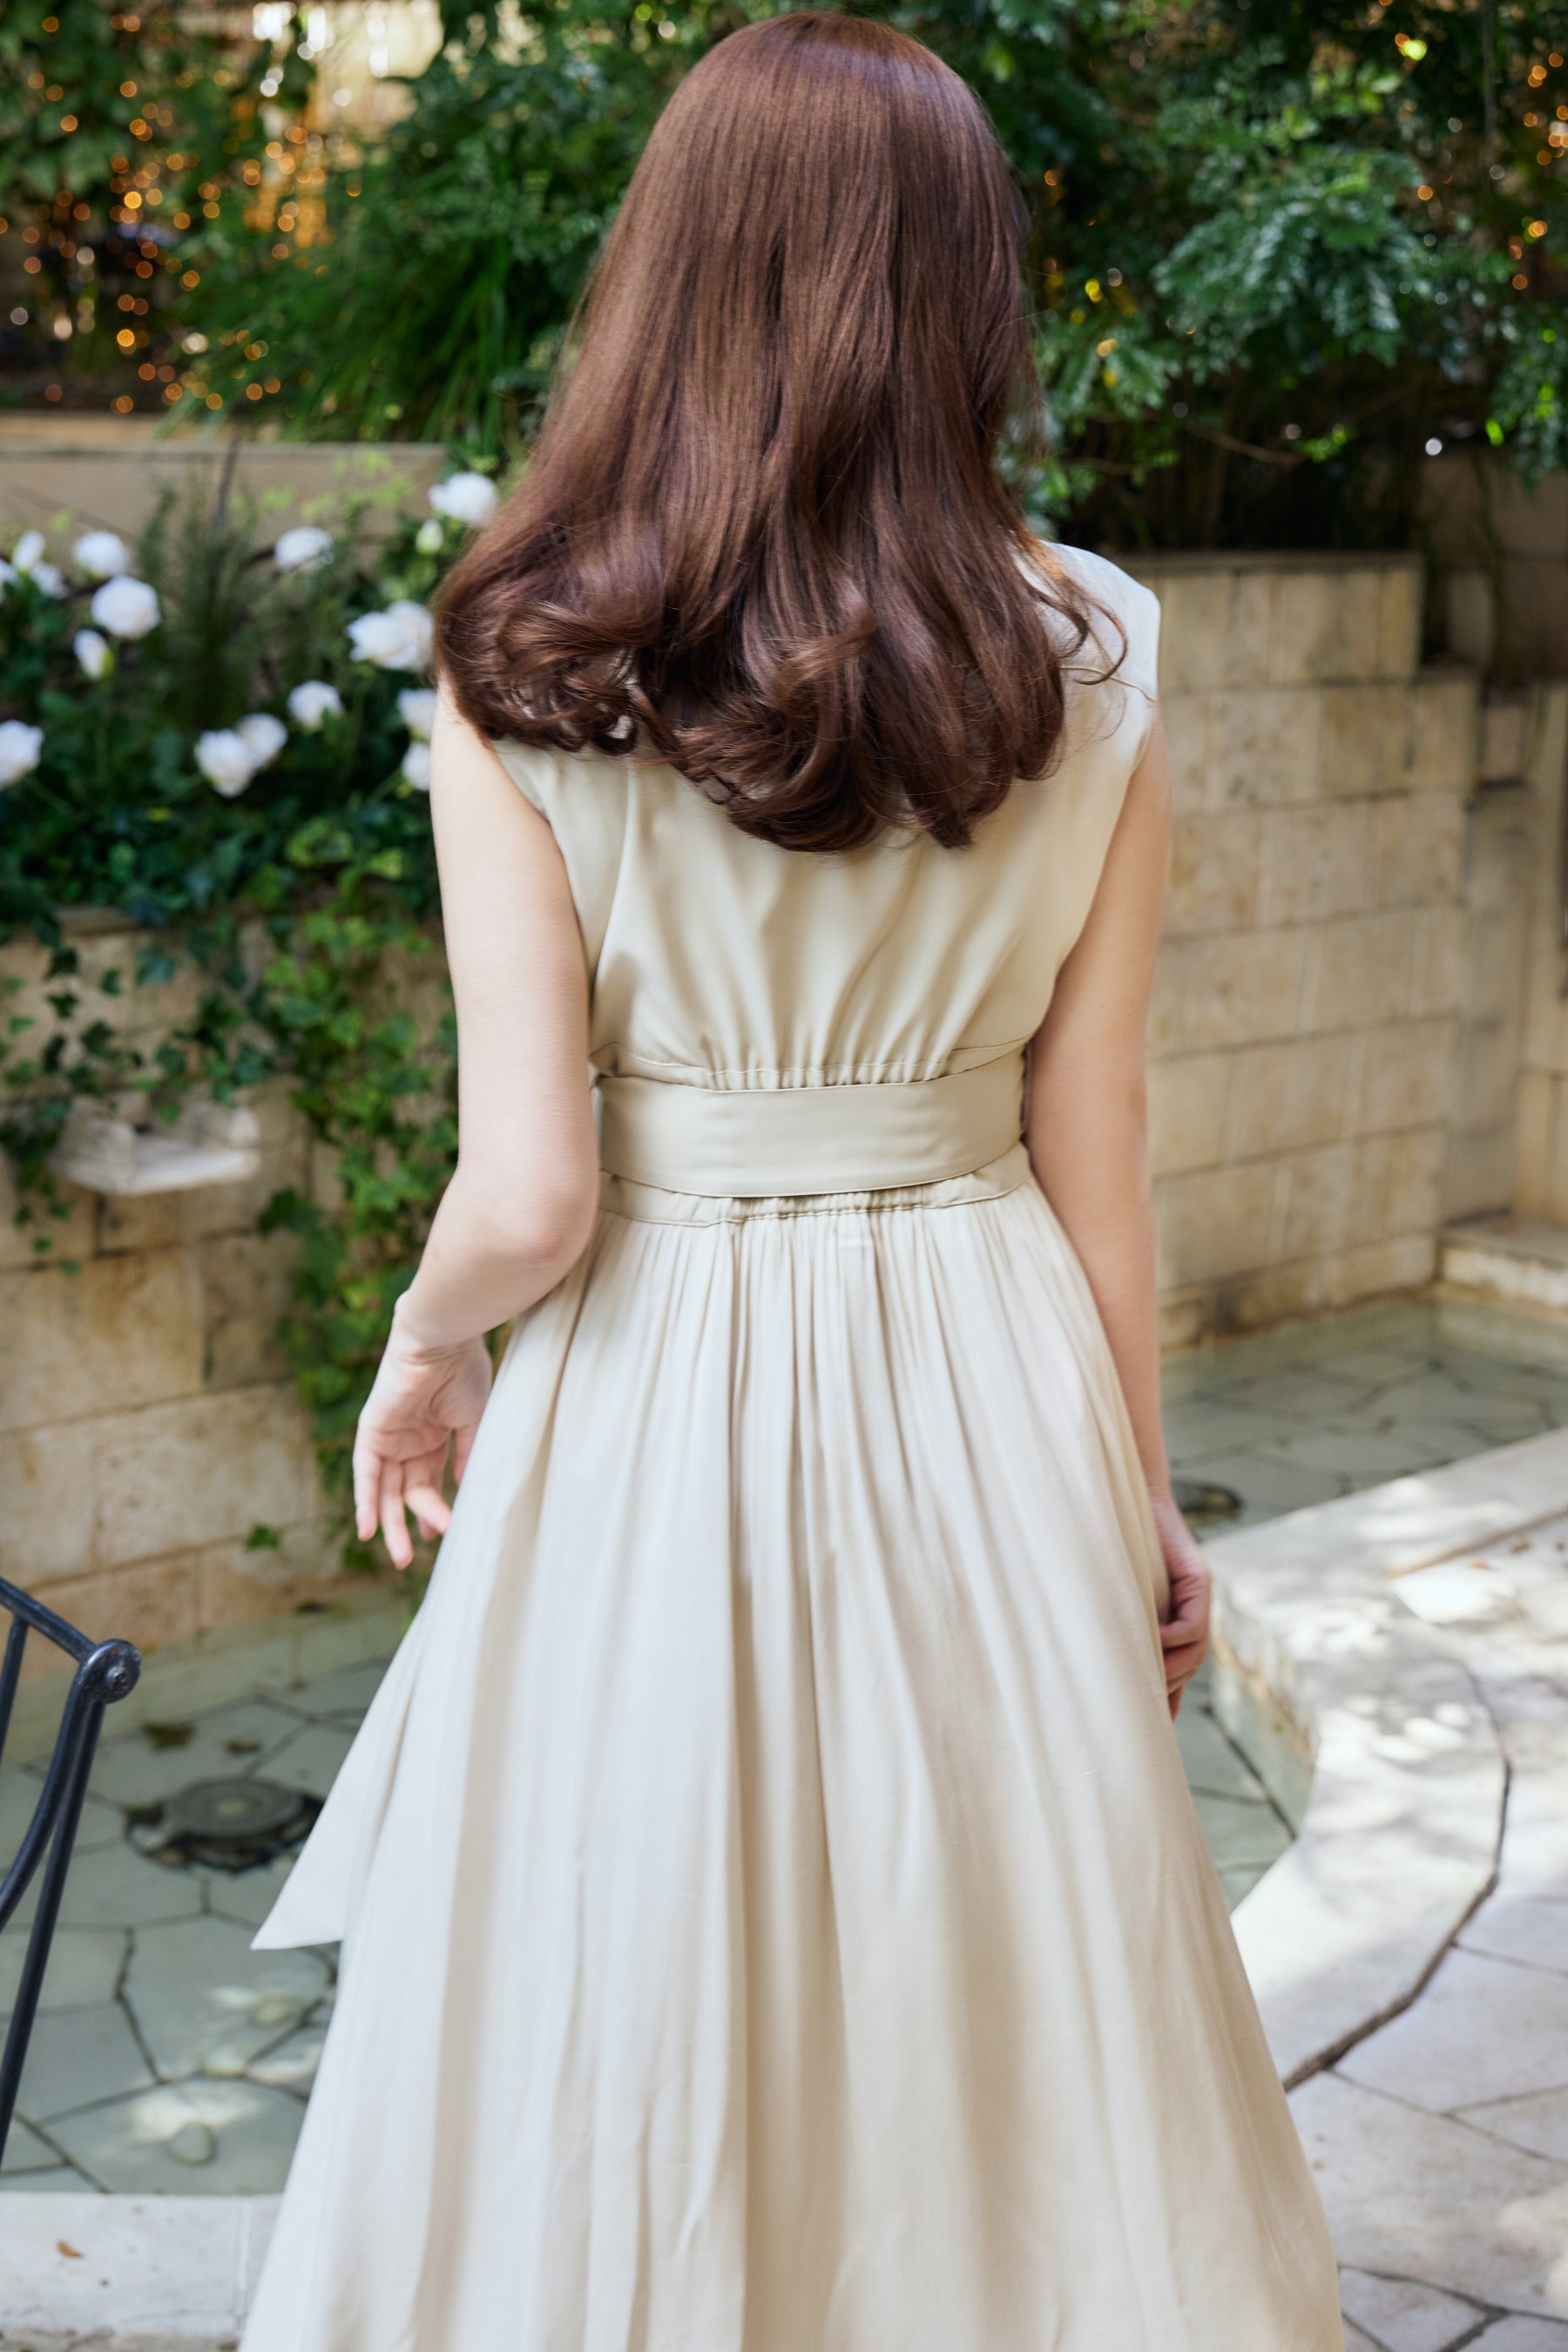 【新品】herlipto Classic Oxford Belted Dress